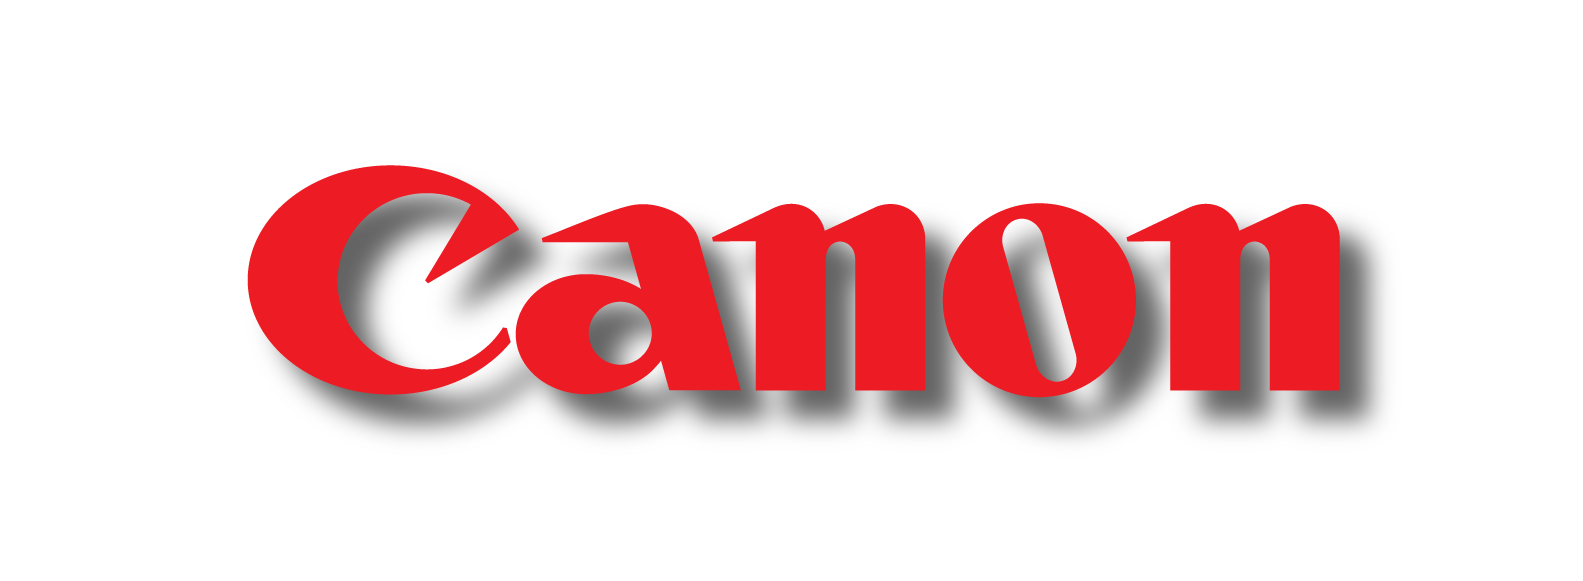 canon-logo-eps-png-canon-logo-1583.png